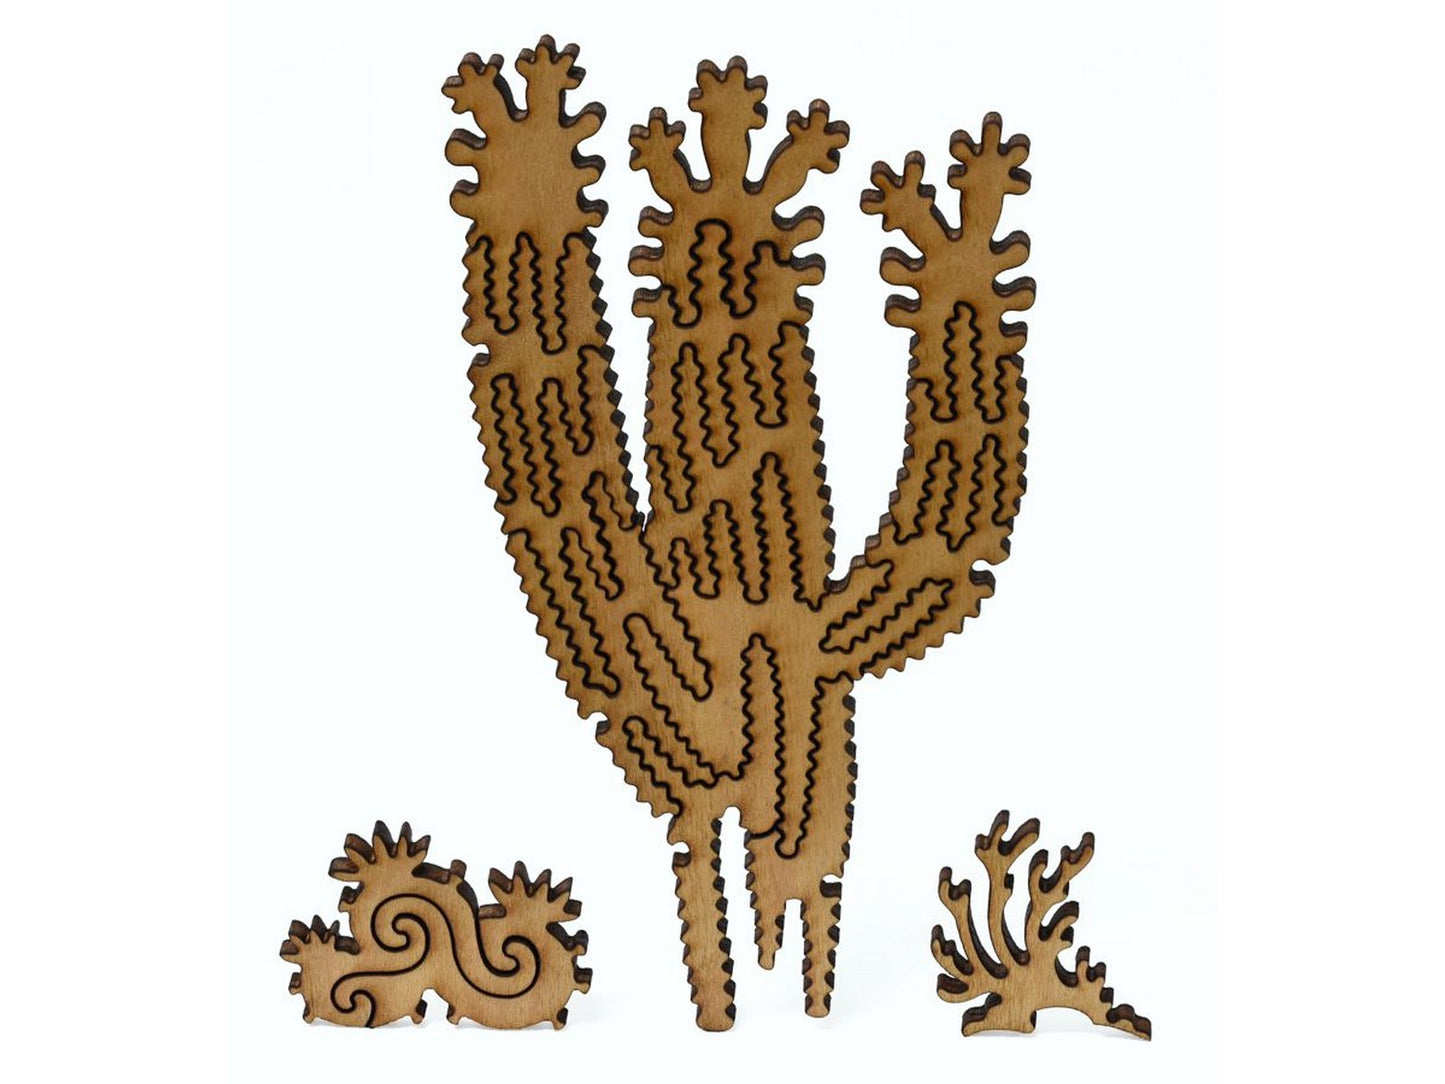 A closeup of pieces showing a multi-piece cactus.